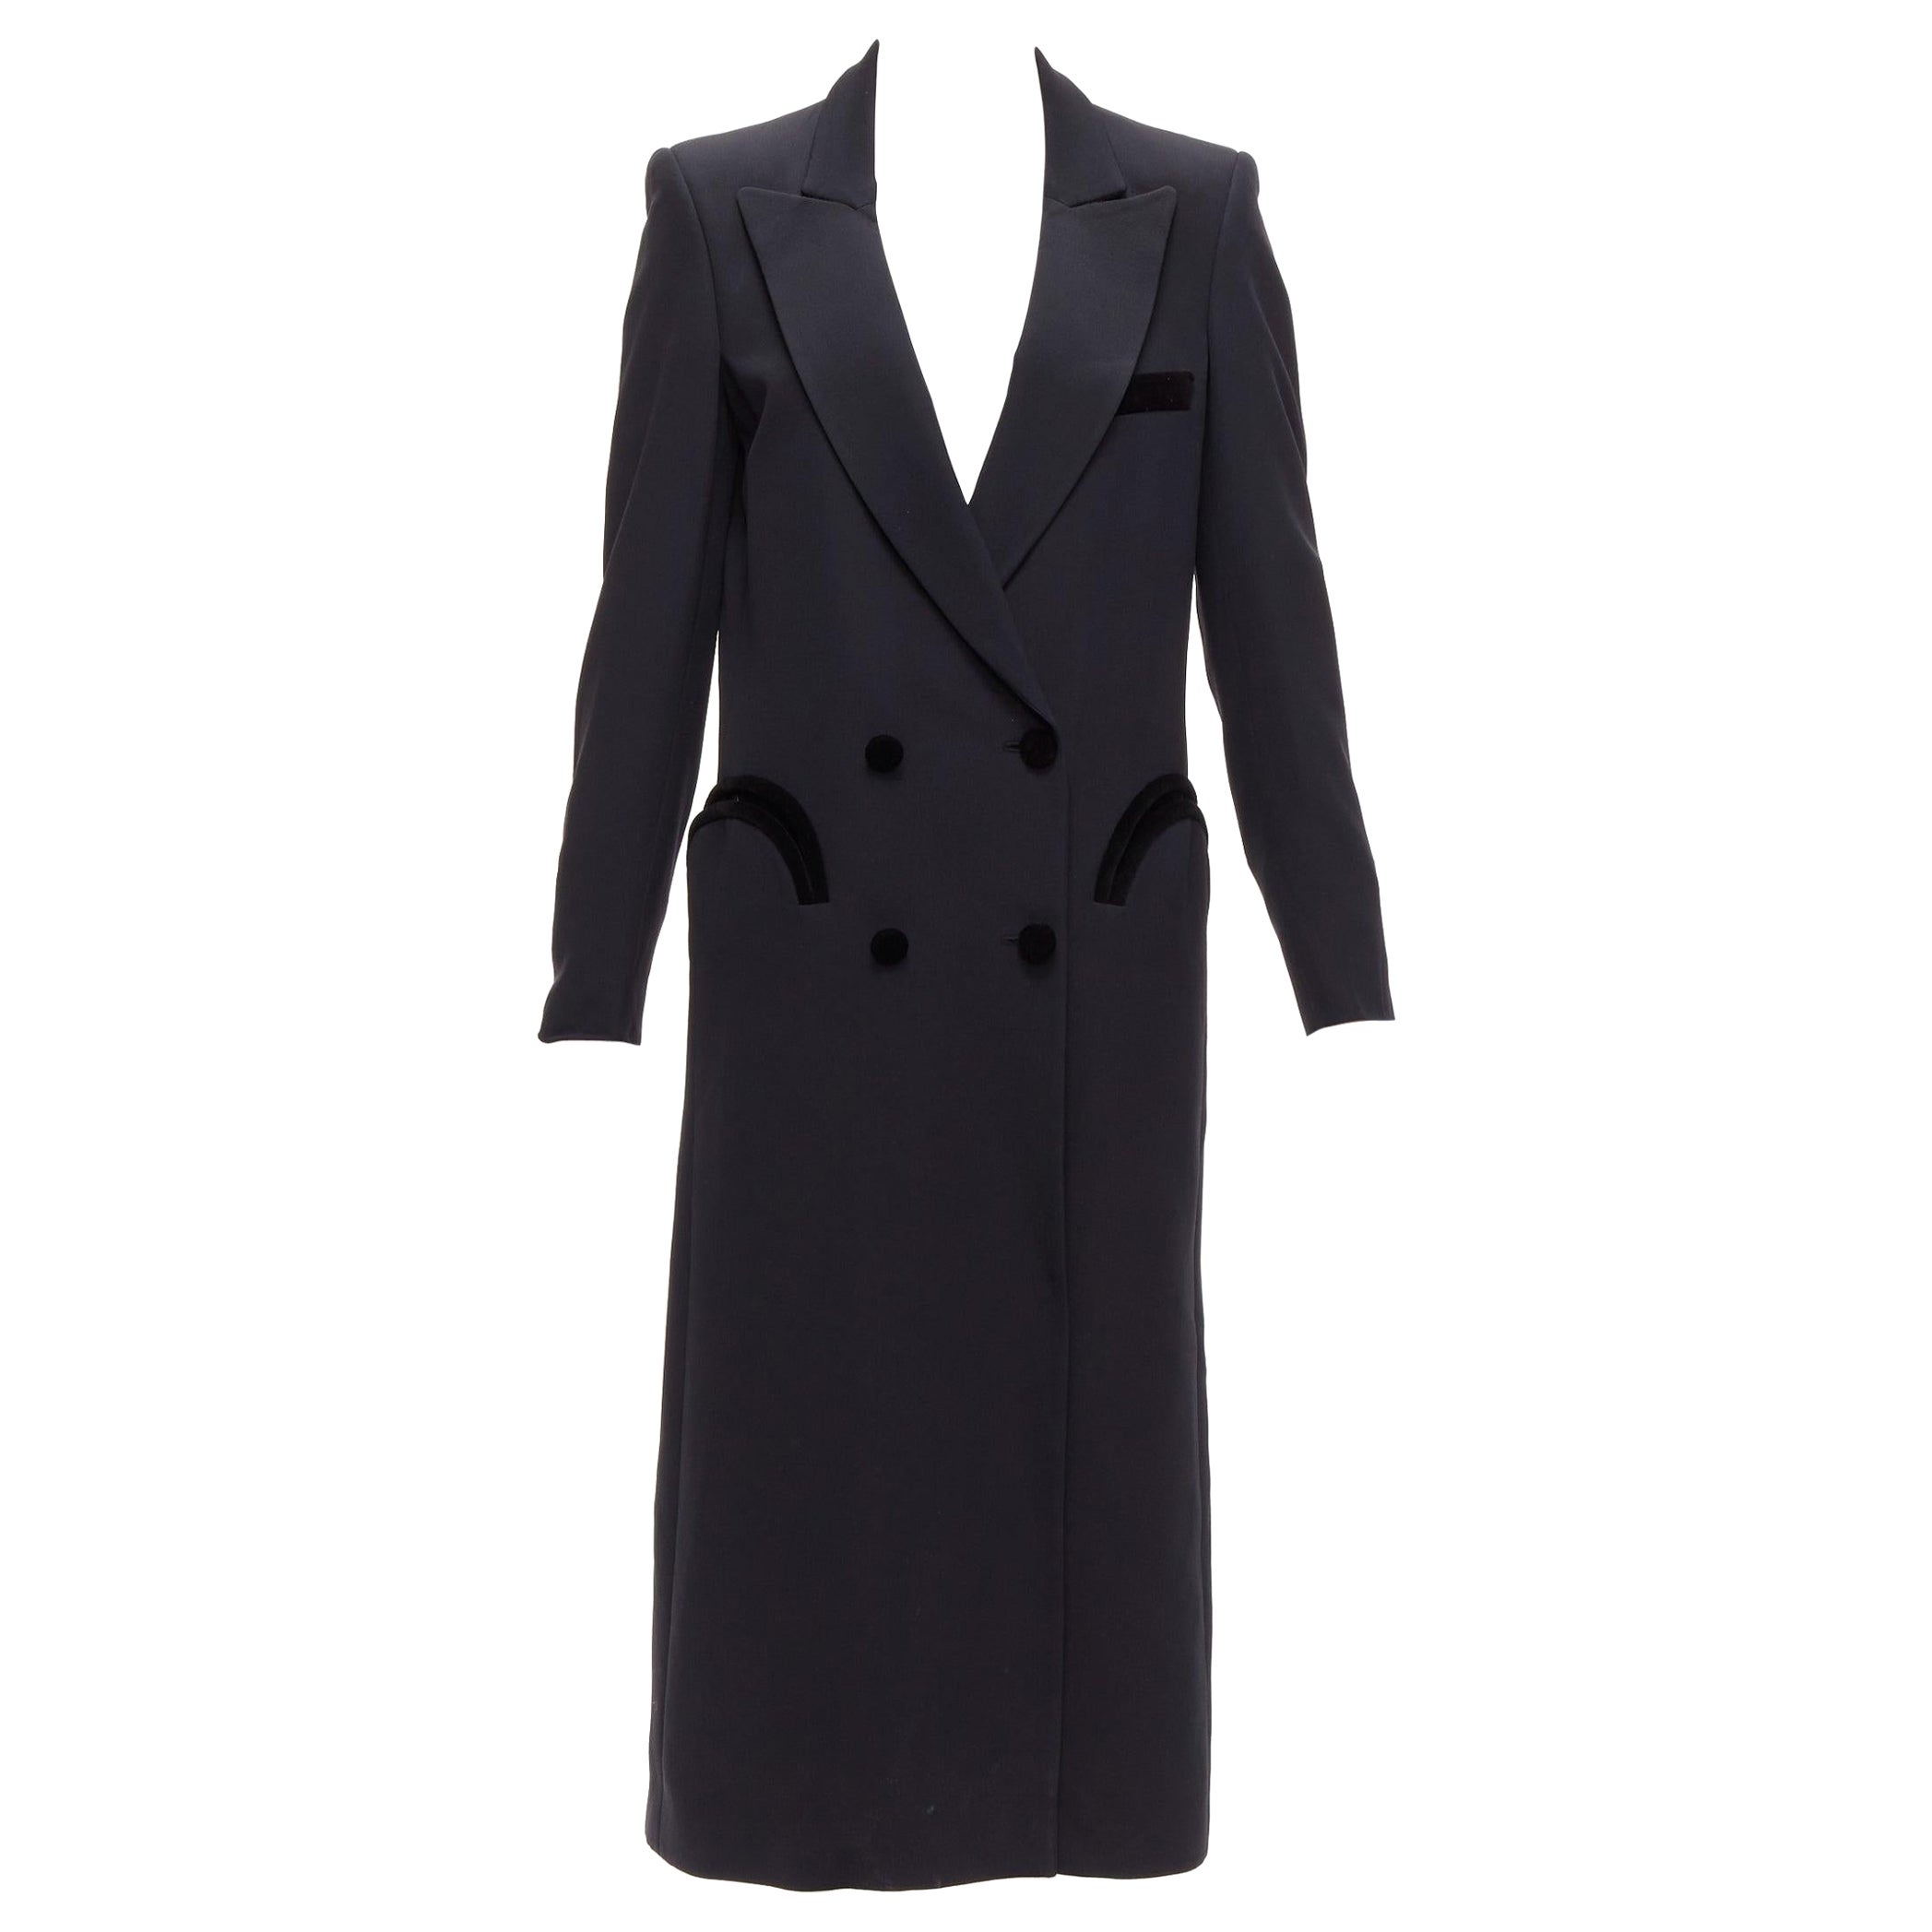 BLAZE MILANO Blazer Dress black curved pockets double breasted coat Sz.1 XS For Sale